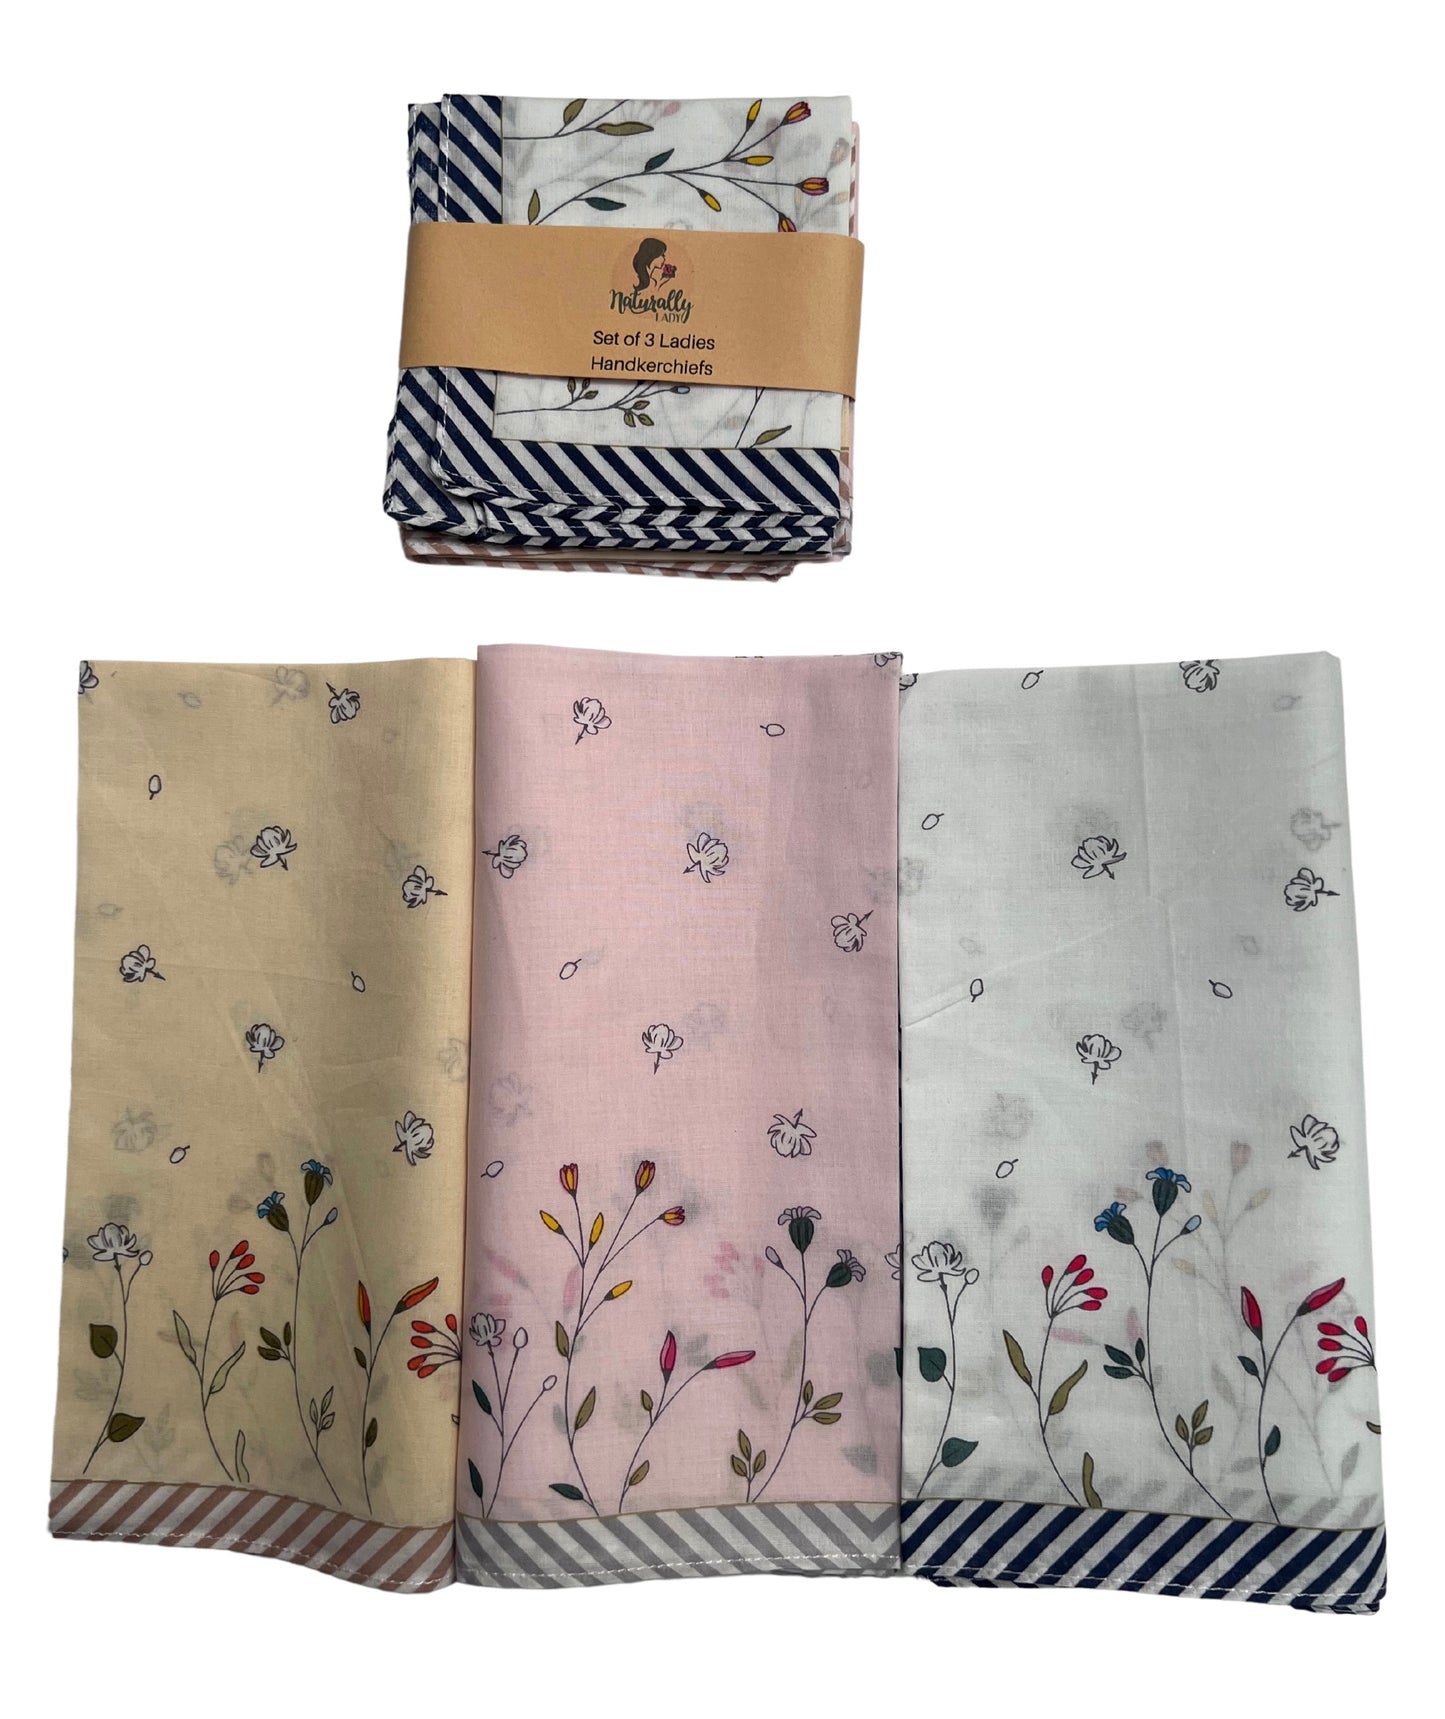 Cotton Ladies Handkerchiefs - Set of 3 45cmx45cm